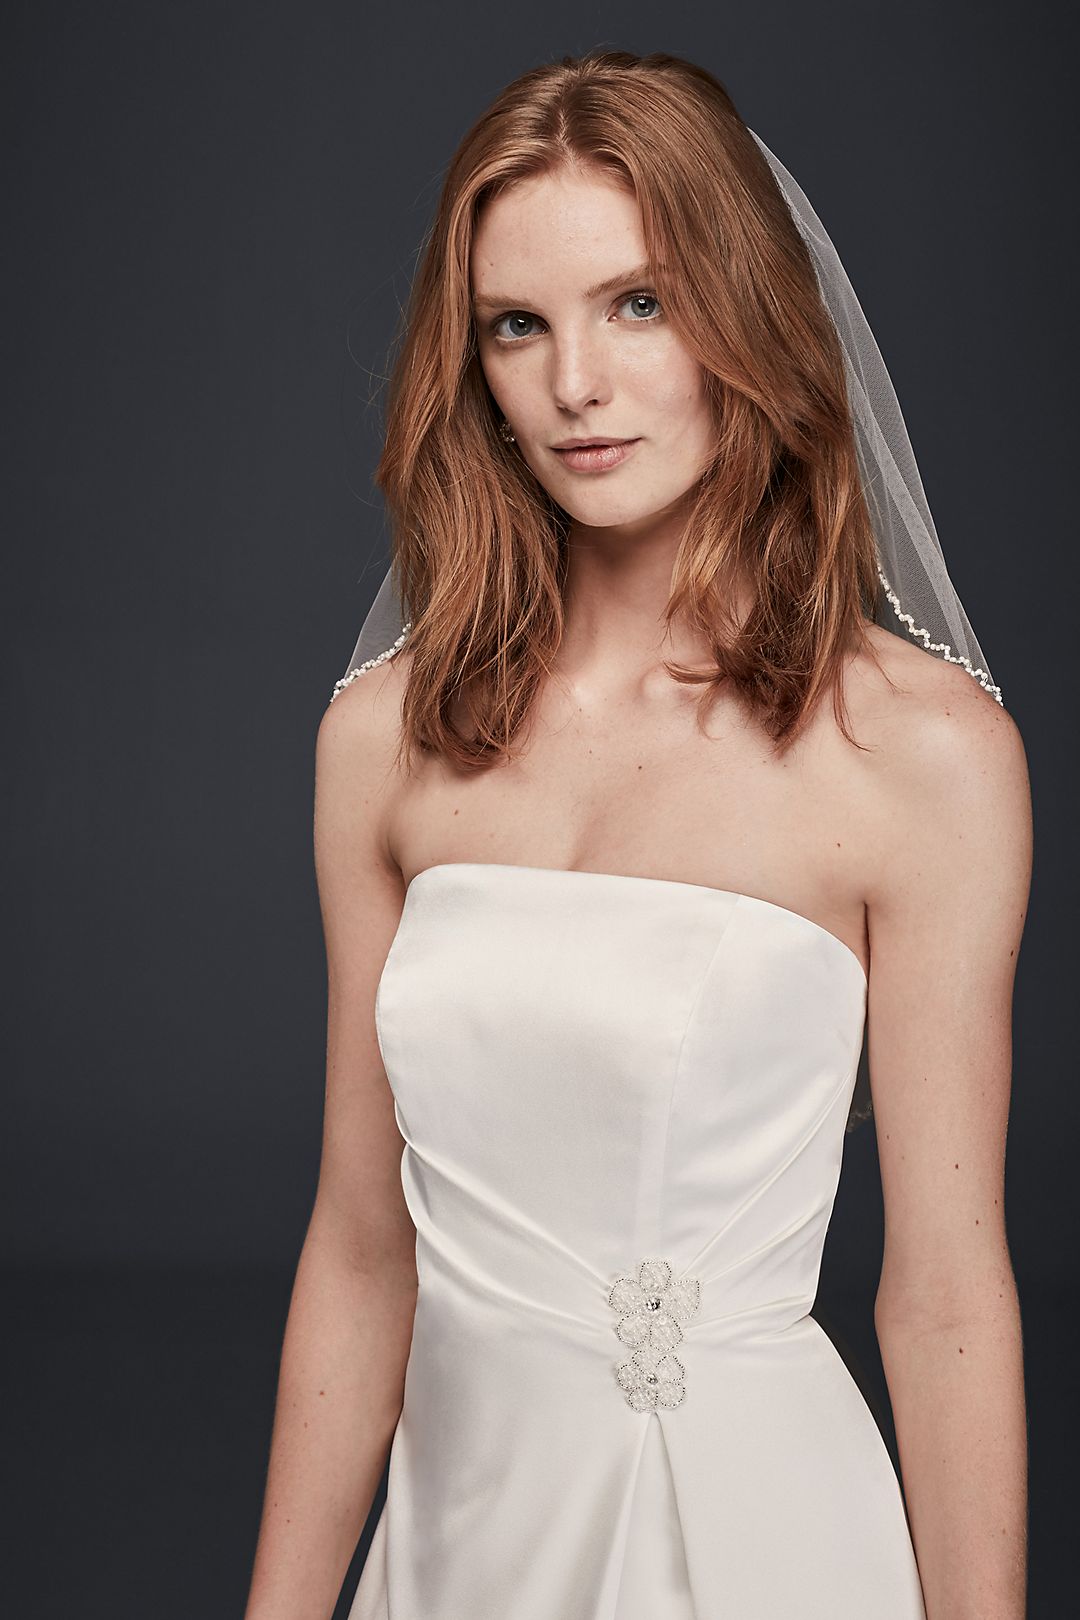 Satin Strapless Beaded Waist A-Line Wedding Dress Image 4